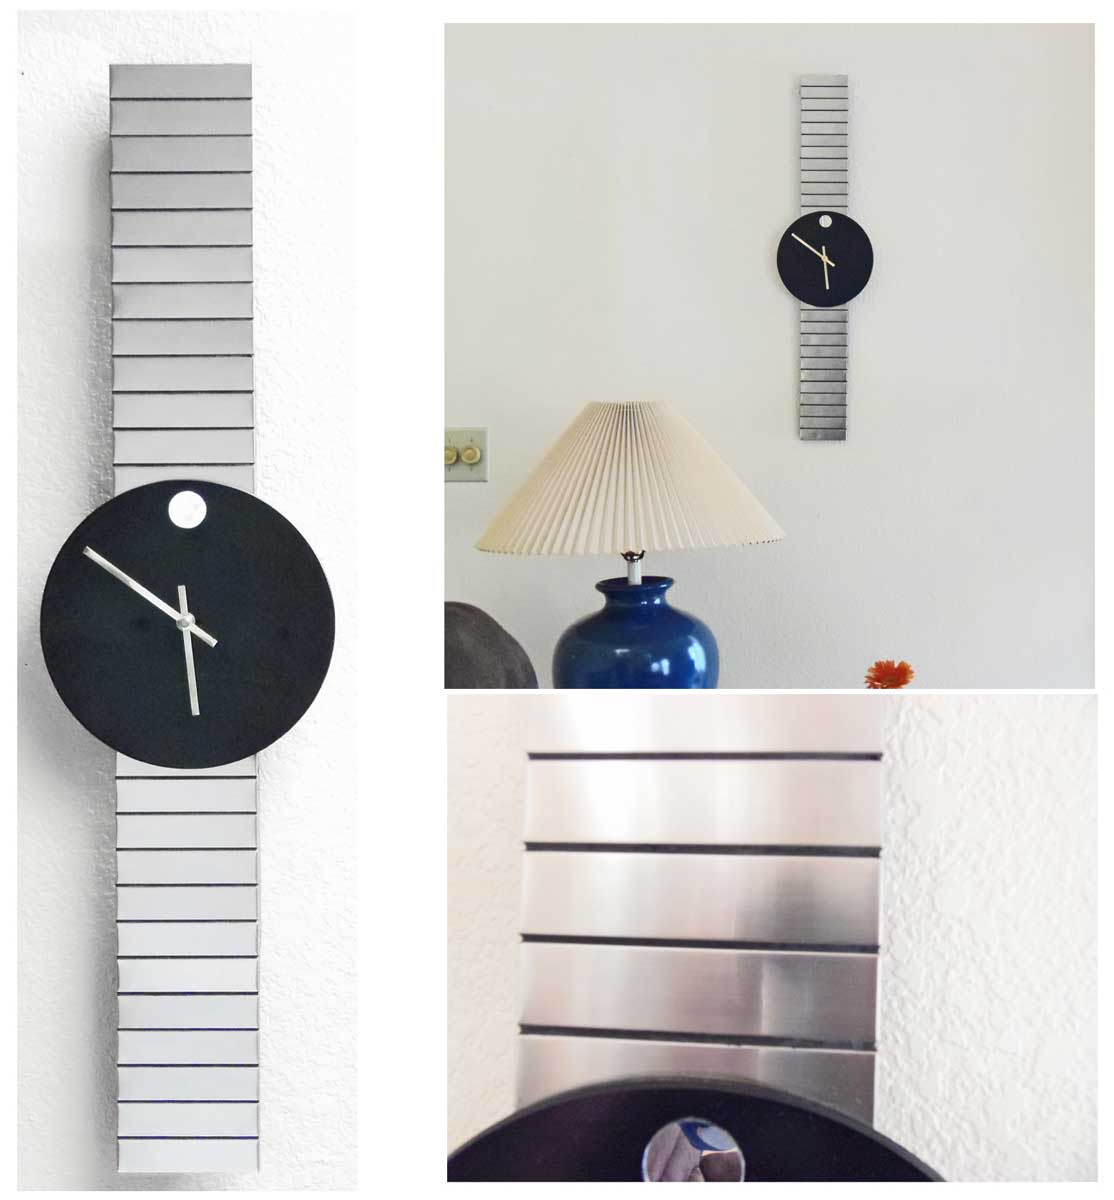 Wrist Watch Wall Clock